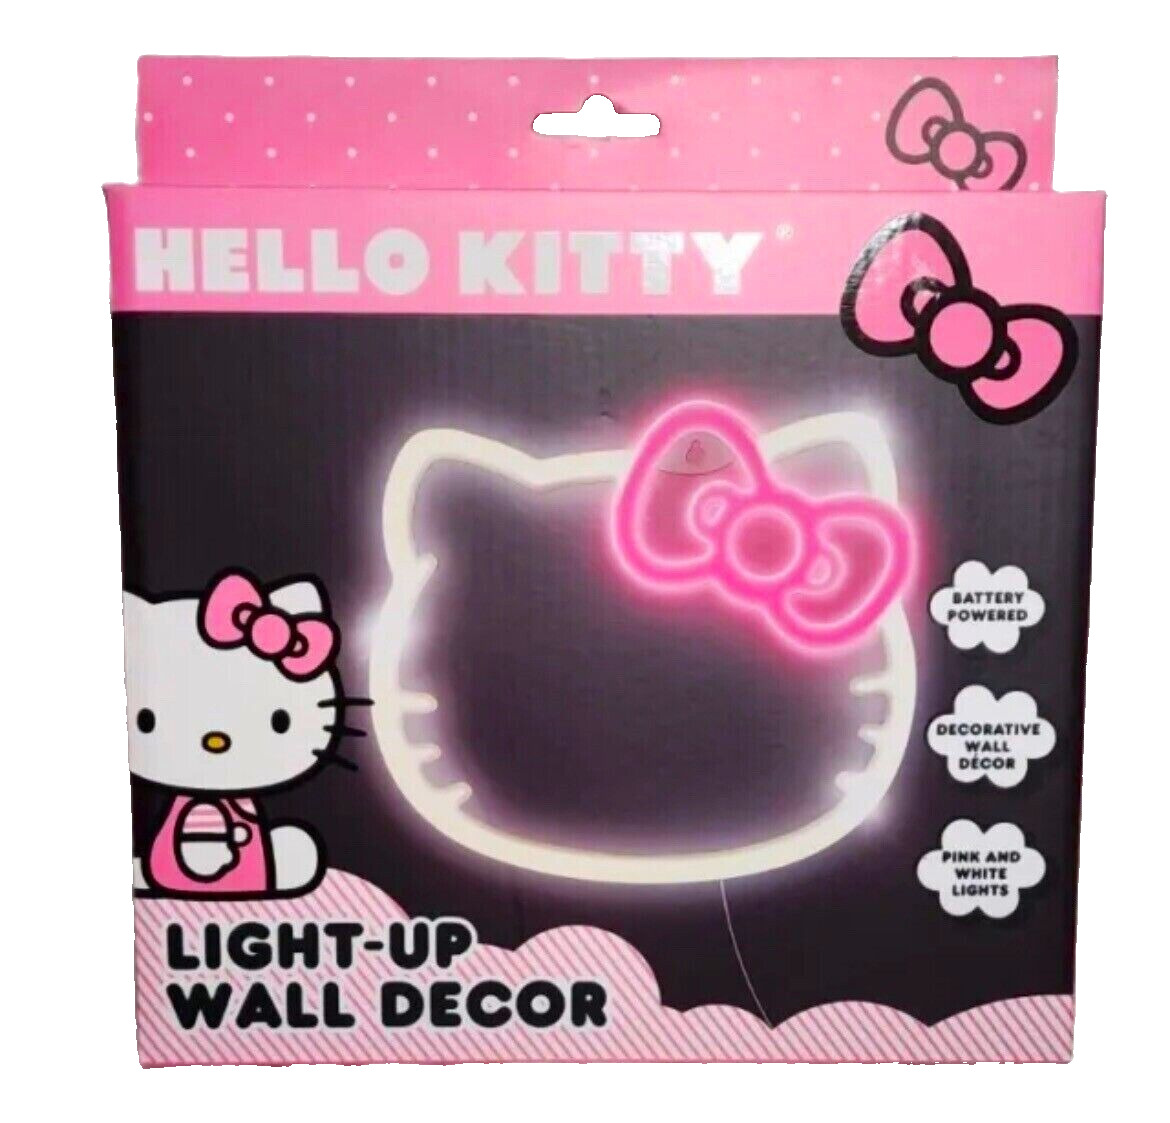 Hello Kitty Light Up Wall Decor Pink & White Lights Battery Powered NIB NEW